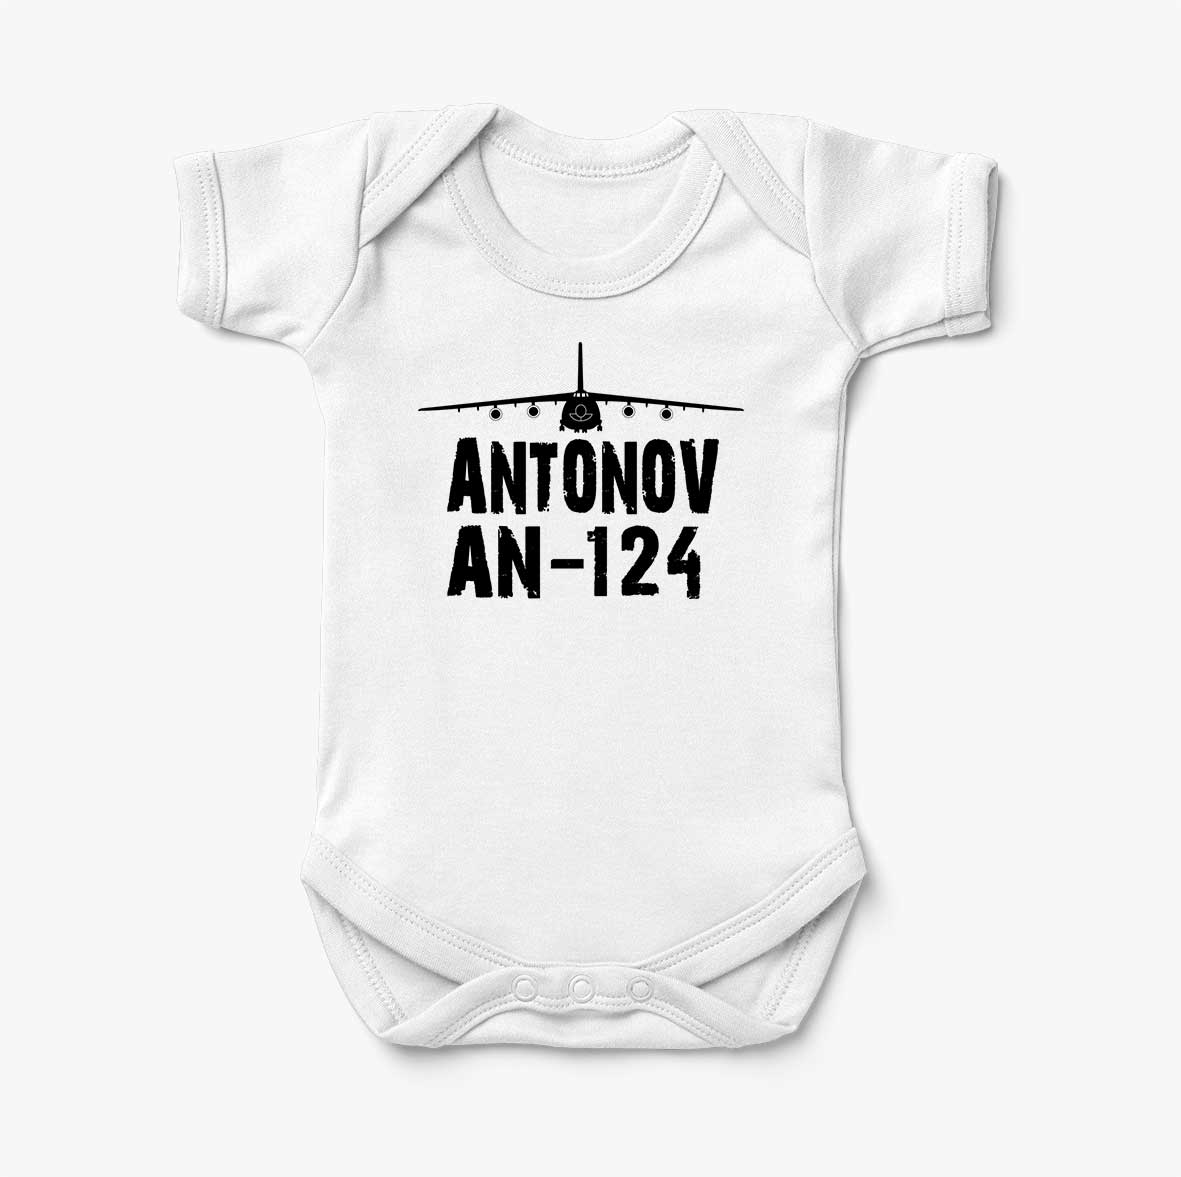 Antonov AN-124 & Plane Designed Baby Bodysuits